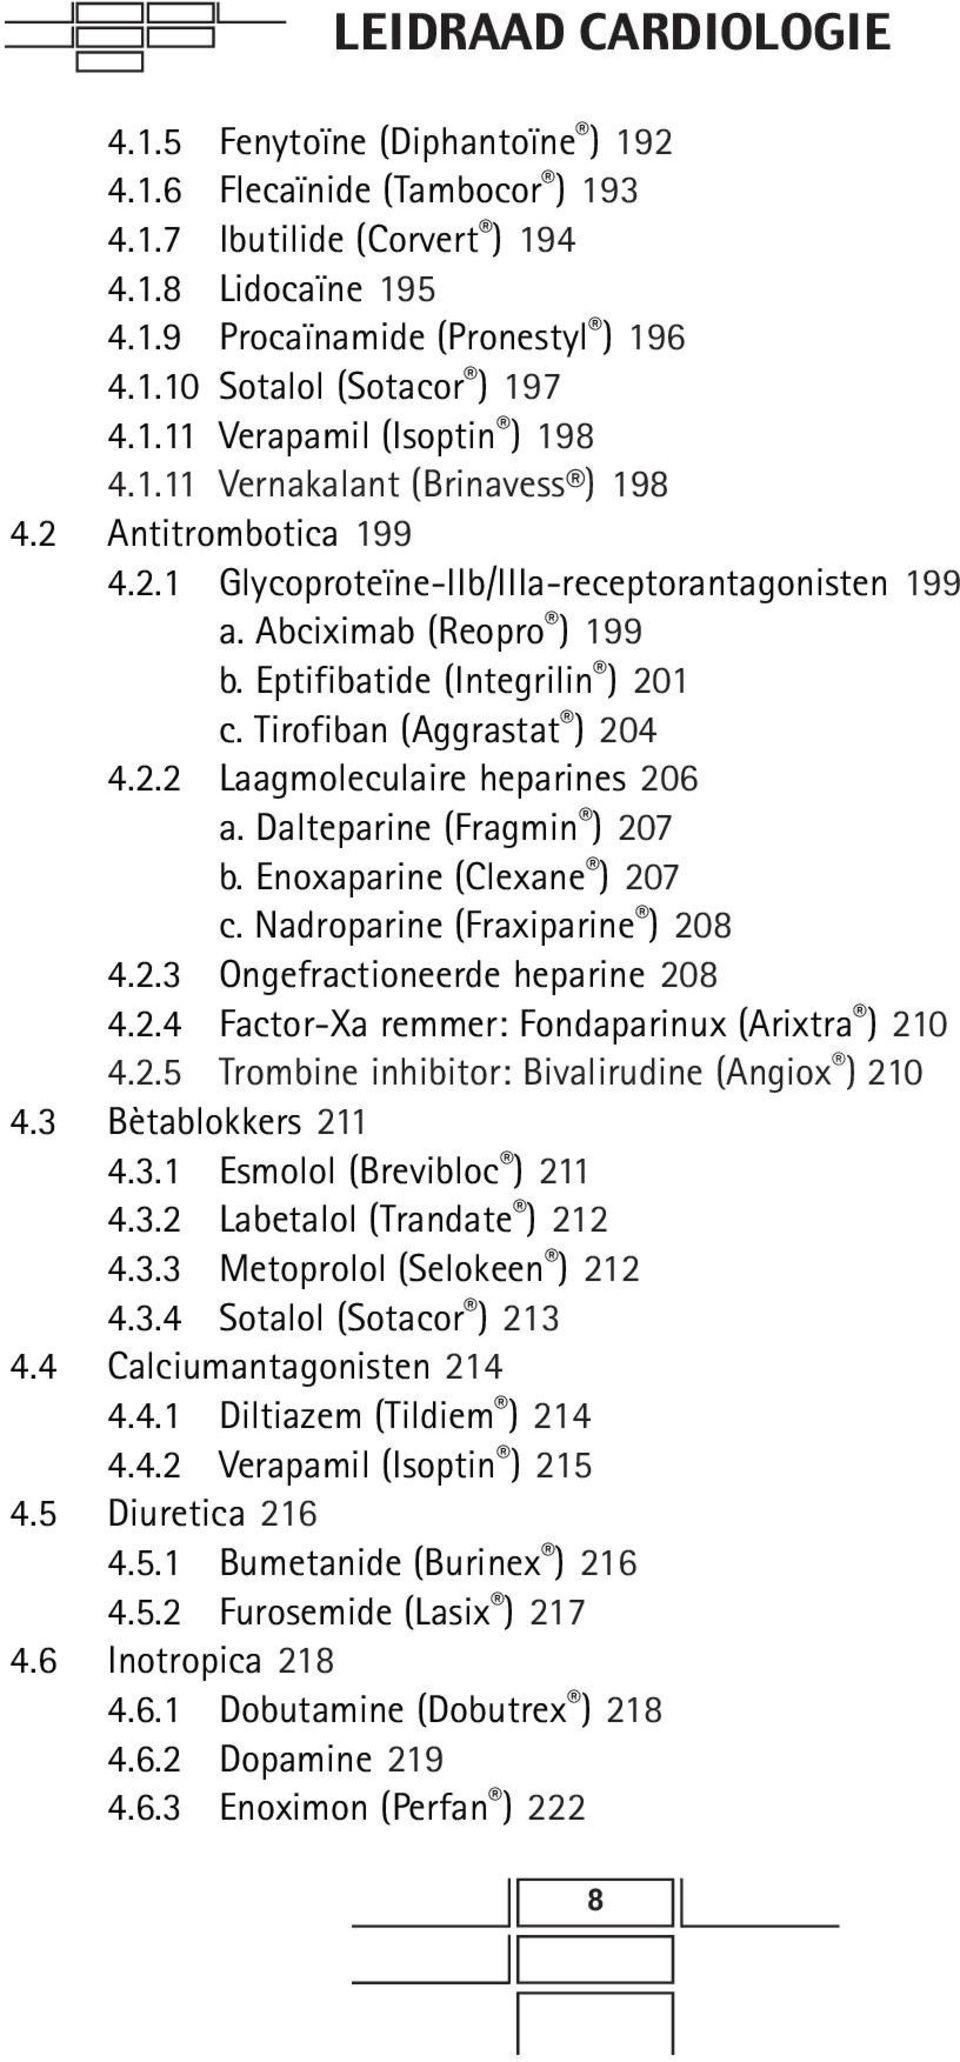 Tirofiban (Aggrastat ) 204 4.2.2 Laagmoleculaire heparines 206 a. Dalteparine (Fragmin ) 207 b. Enoxaparine (Clexane ) 207 c. Nadroparine (Fraxiparine ) 208 4.2.3 Ongefractioneerde heparine 208 4.2.4 Factor-Xa remmer: Fondaparinux (Arixtra ) 210 4.